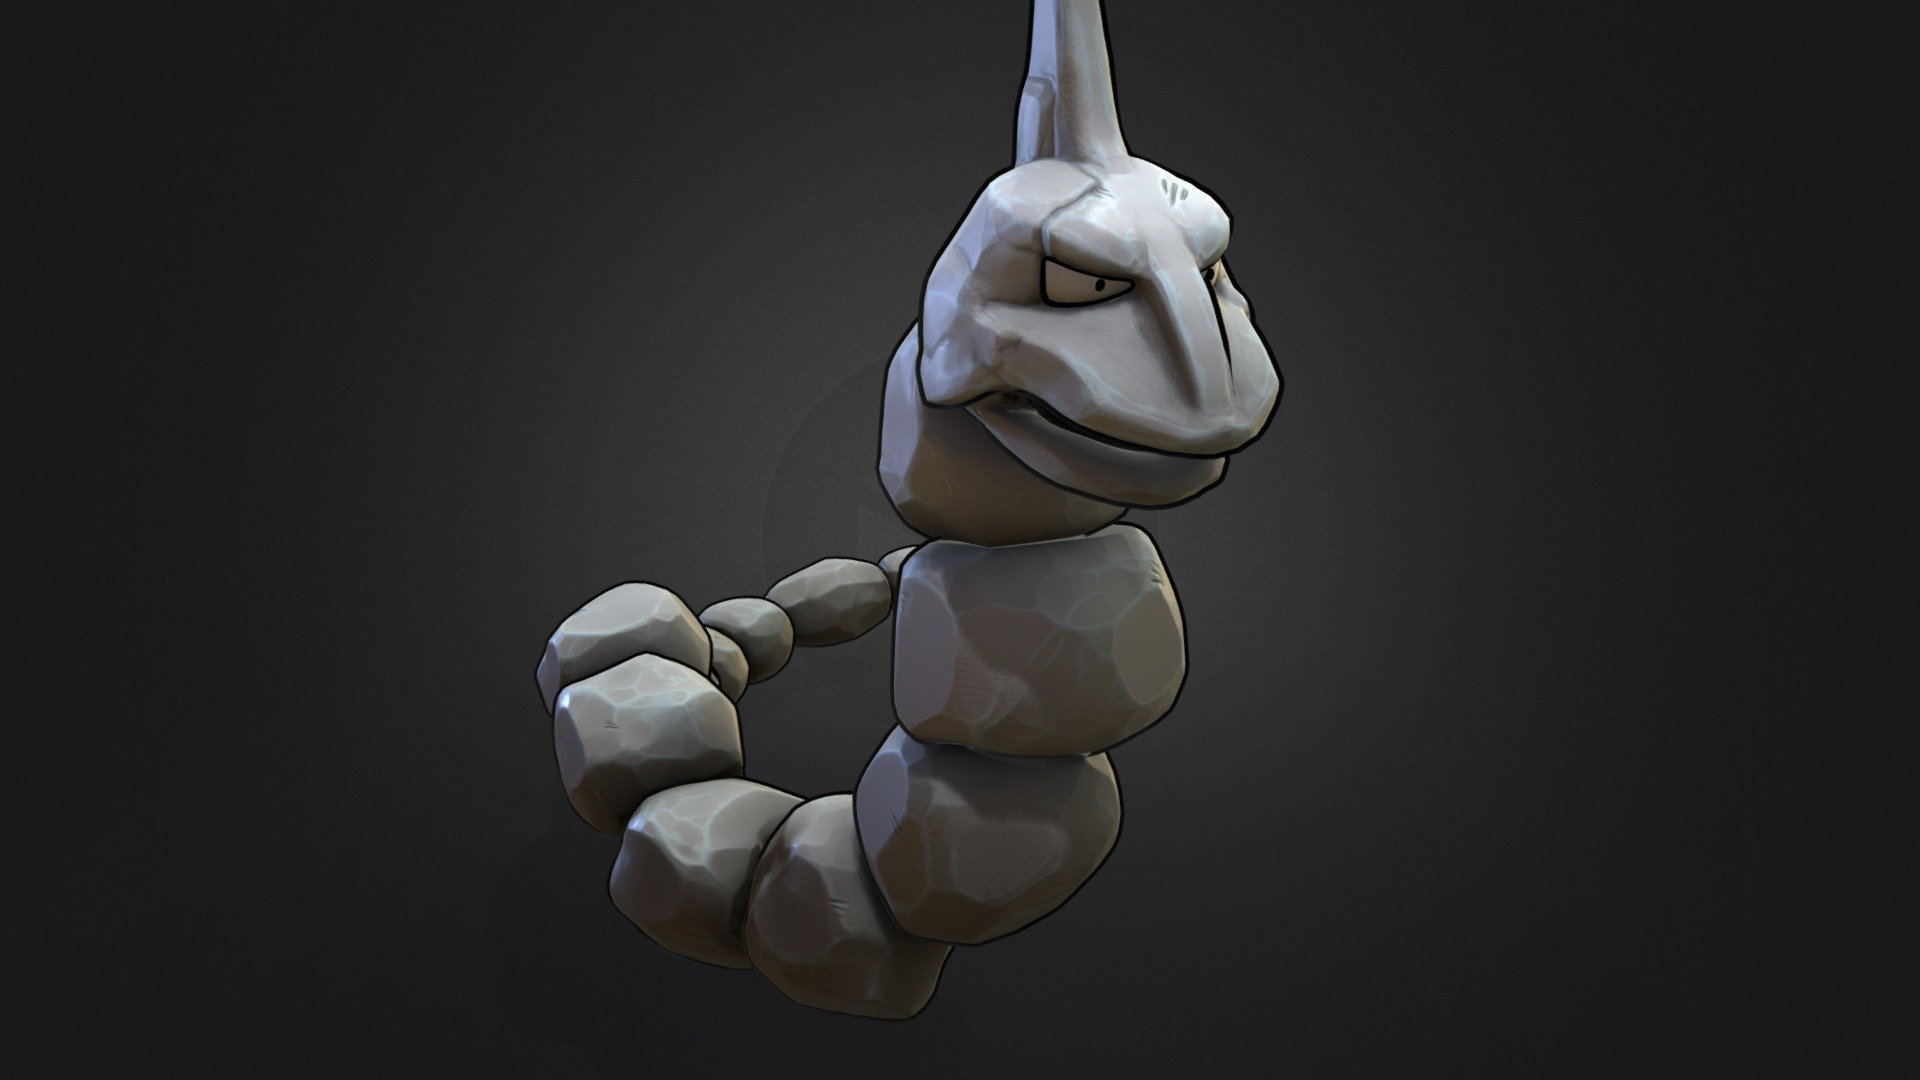 Onix image - Pokémon MMO 3D - IndieDB